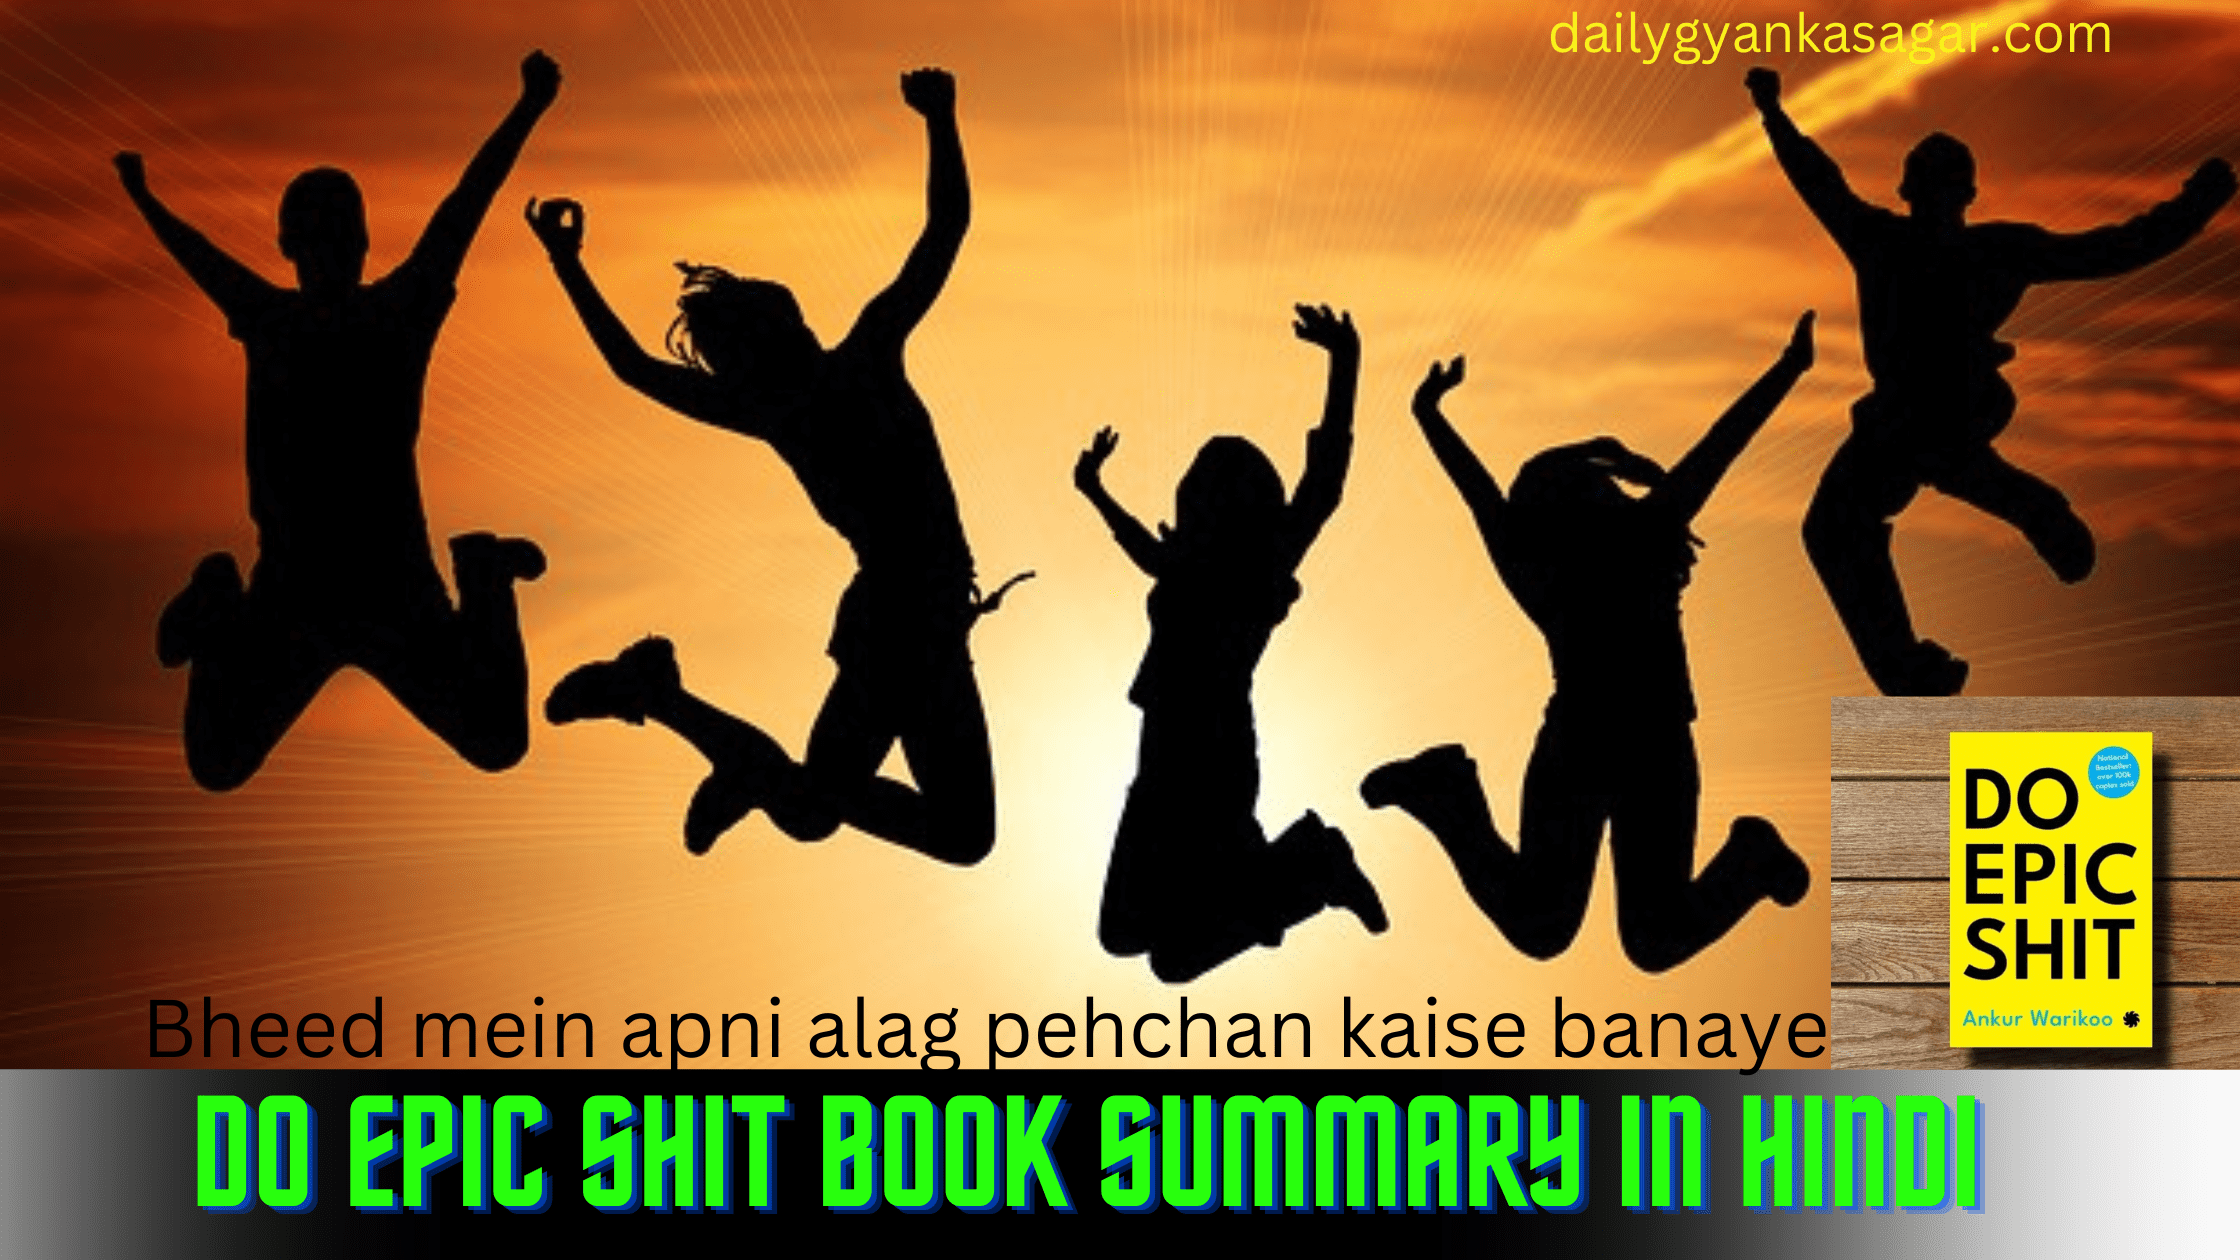 Bheed mein apni alag pehchan kaise banaye/ Do epic shit book summary in Hindi